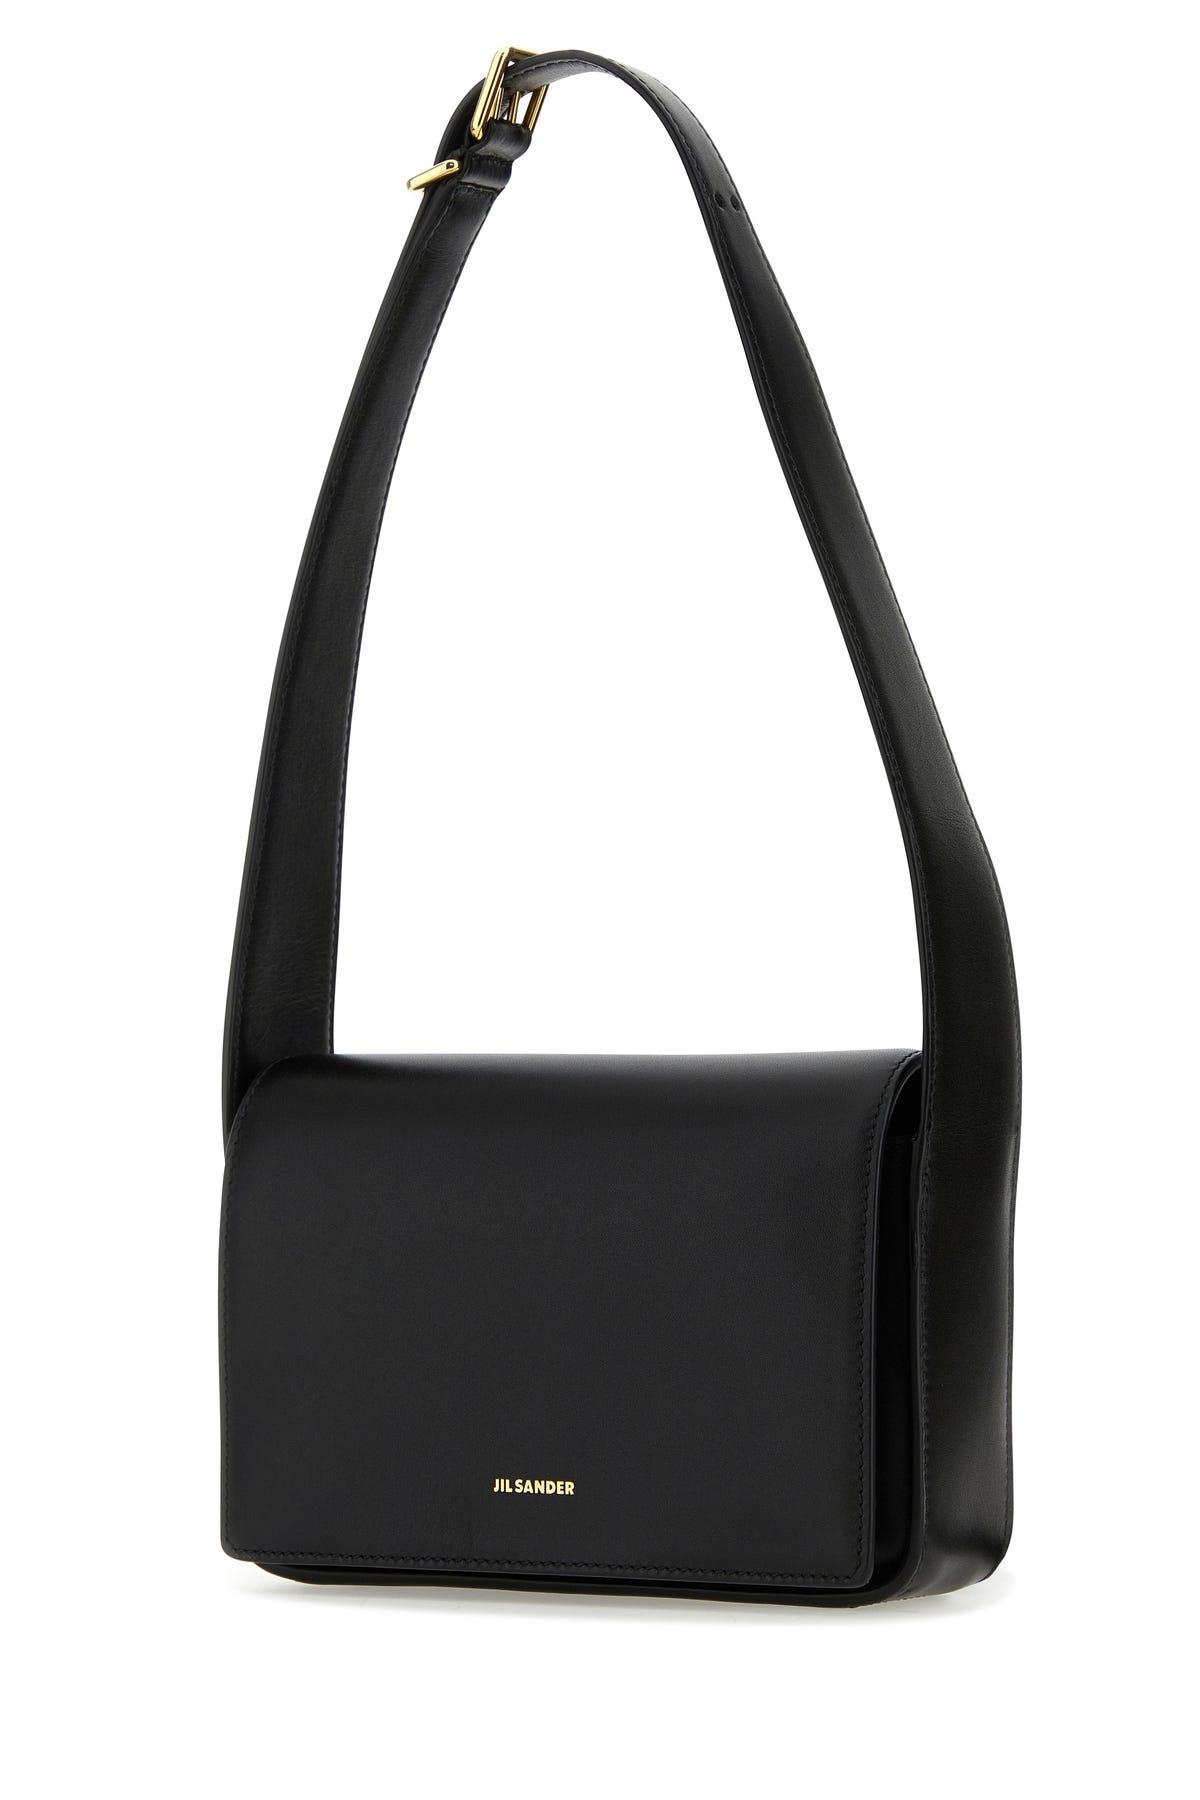 Jil Sander Shoulder Bags in Black | Lyst